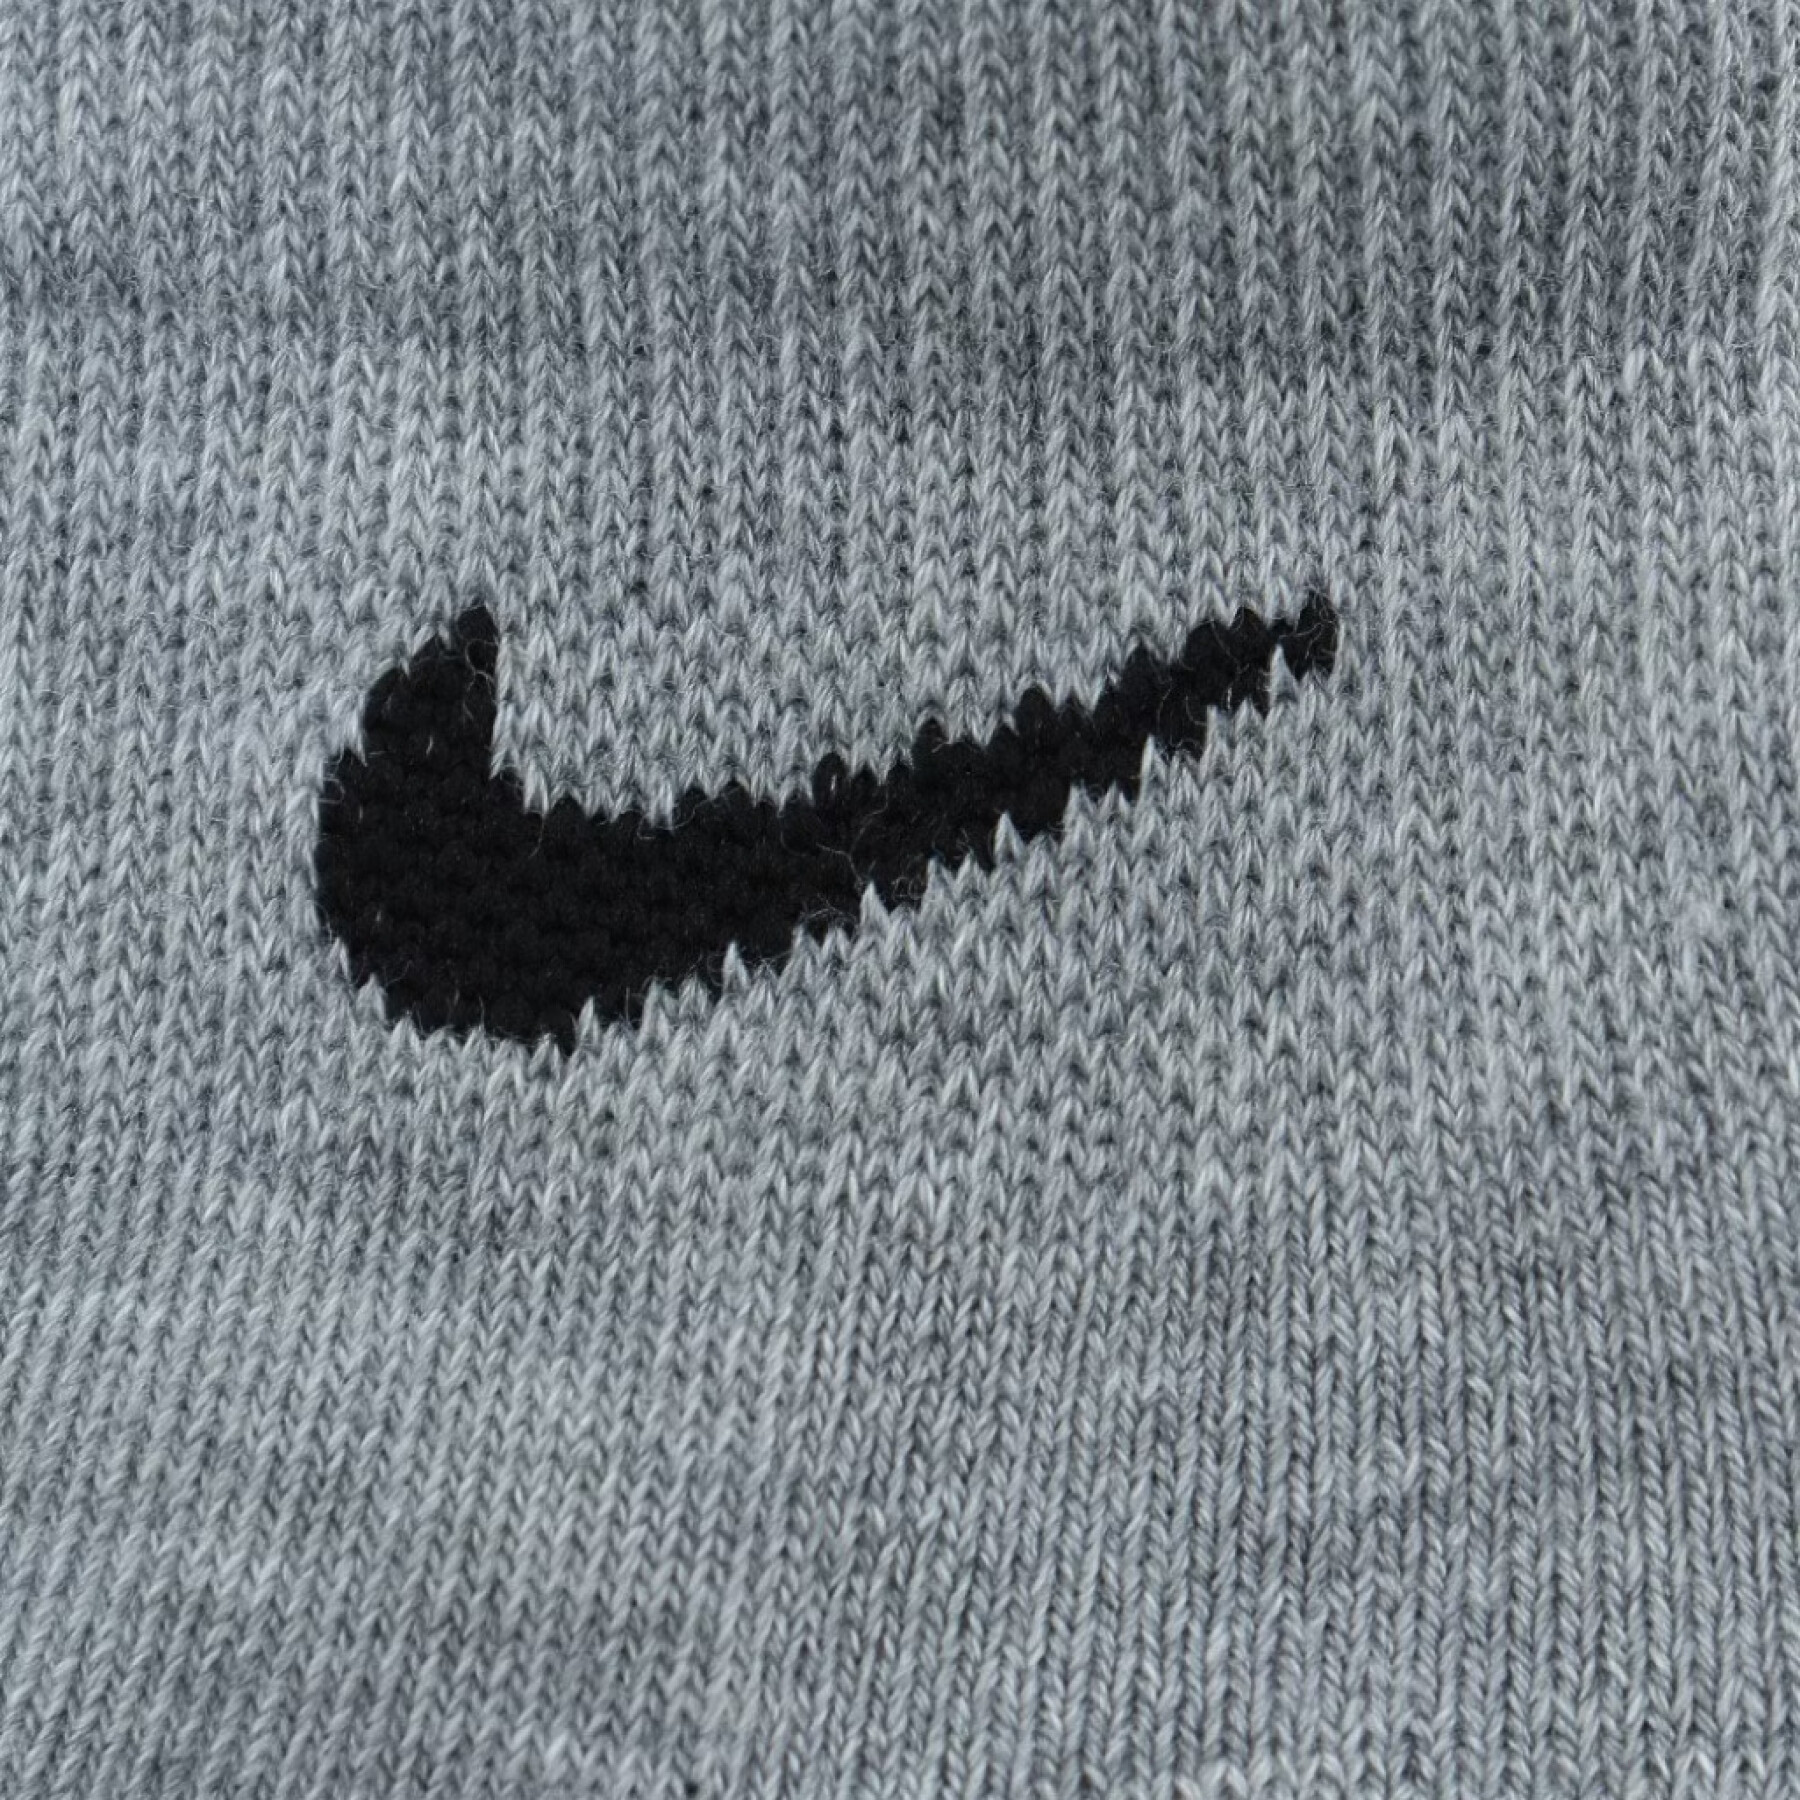 Lote de 3 calcetines para niños Nike Basic